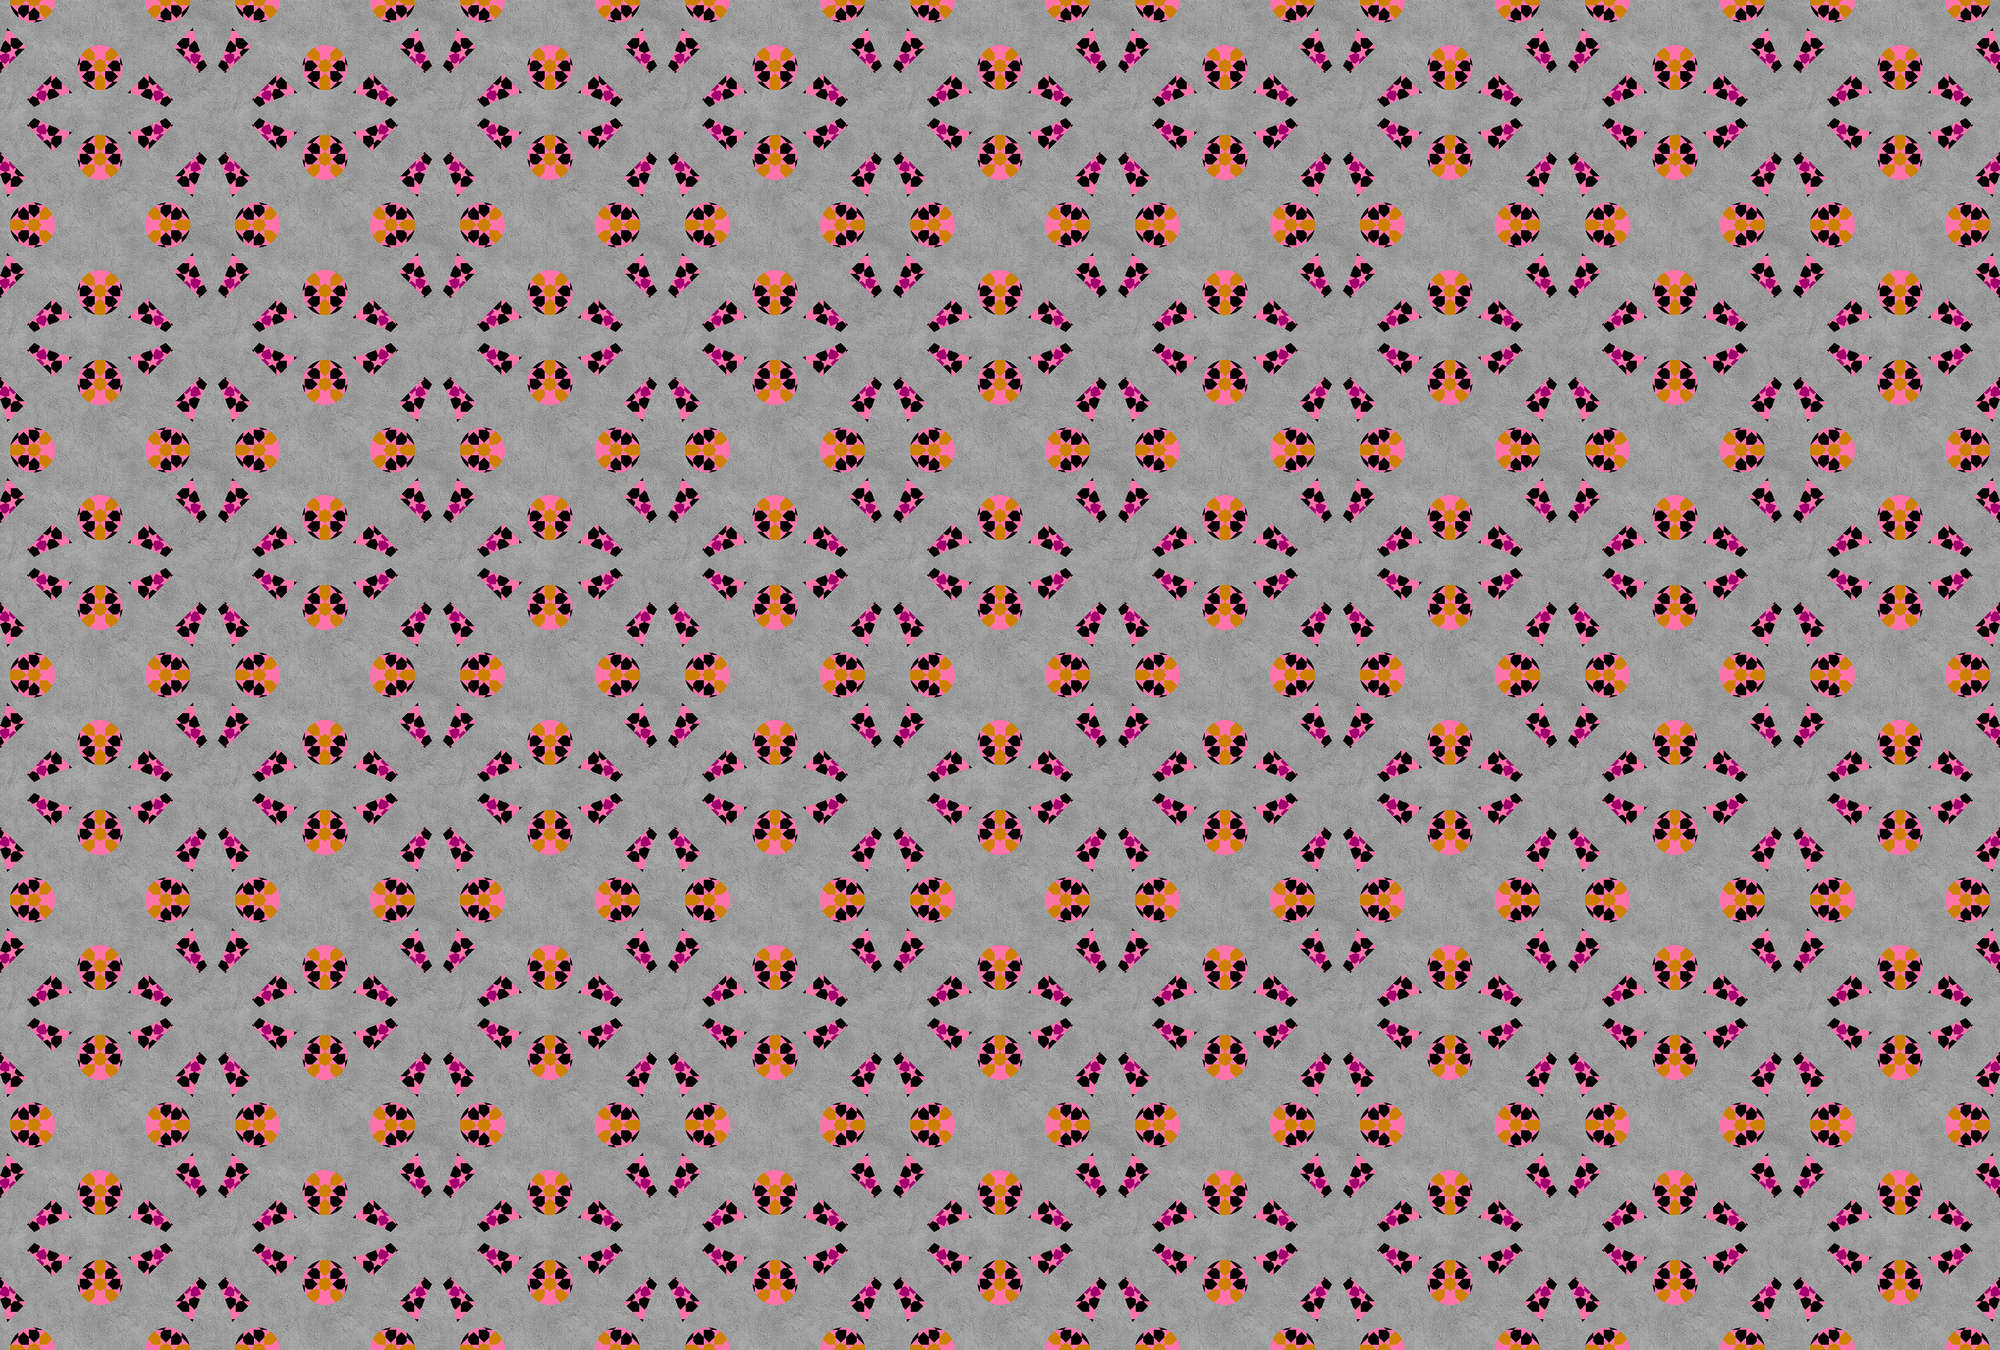             Photo wallpaper abstract graphic pattern - grey, orange
        